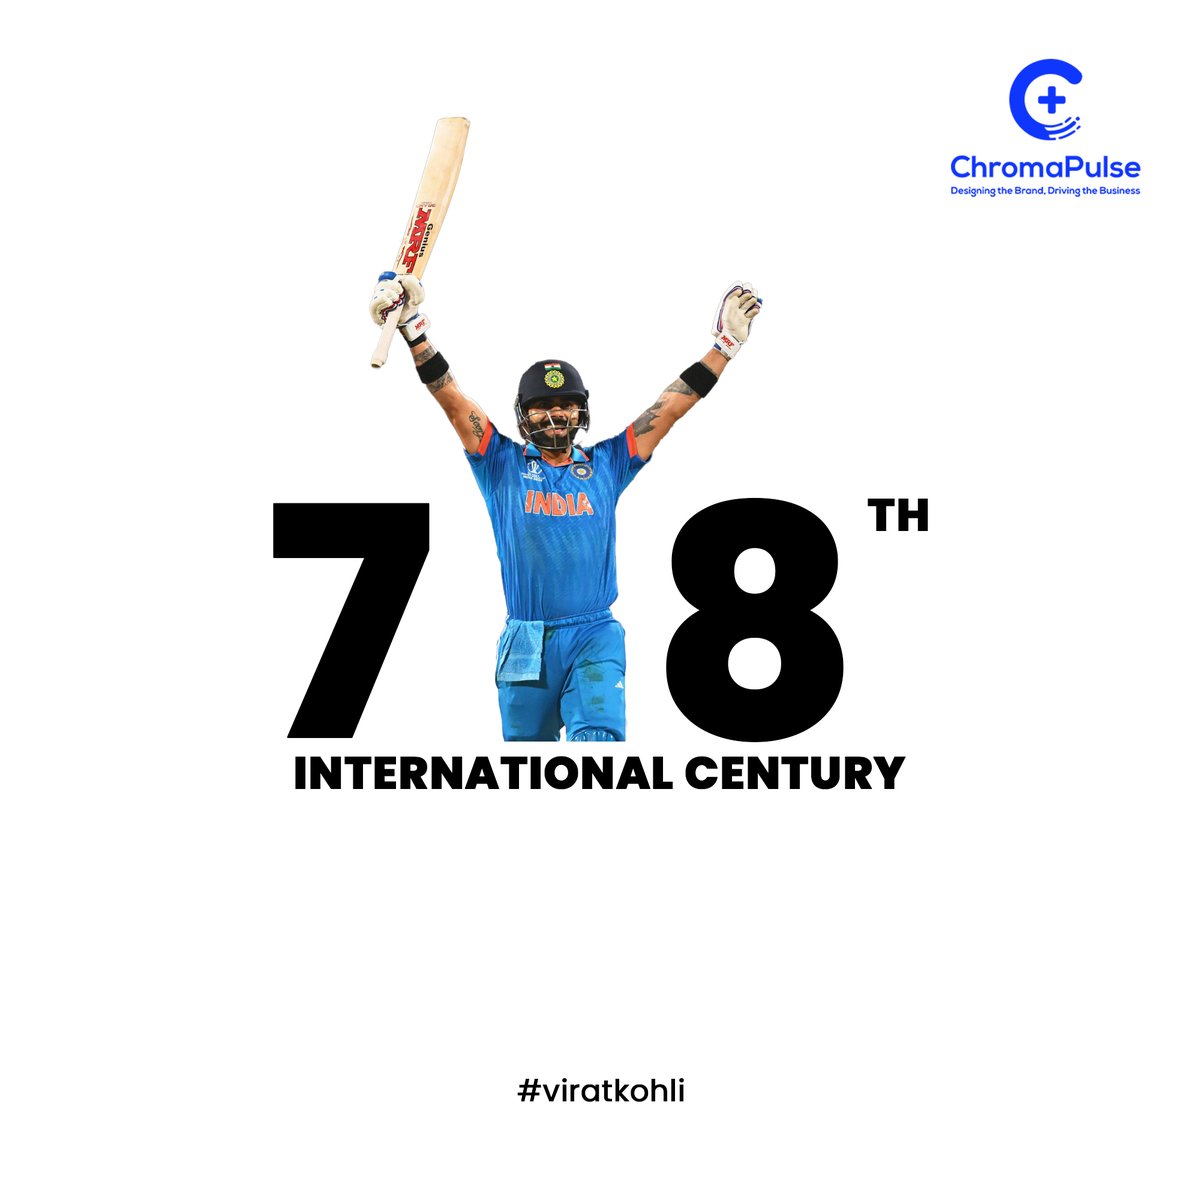 78th International Century for King Kohli.
#virals #topicalpost #creativepost #chromaplus_ #iccwc23 #worldcup2023 #indiancricket #india #indiavsbangladesh #indiancricketteam #cricketlover #cricketworld #cricketer #viratlovers #viratkohlifans #ICC #viratkohlifanpage #ViratKohli